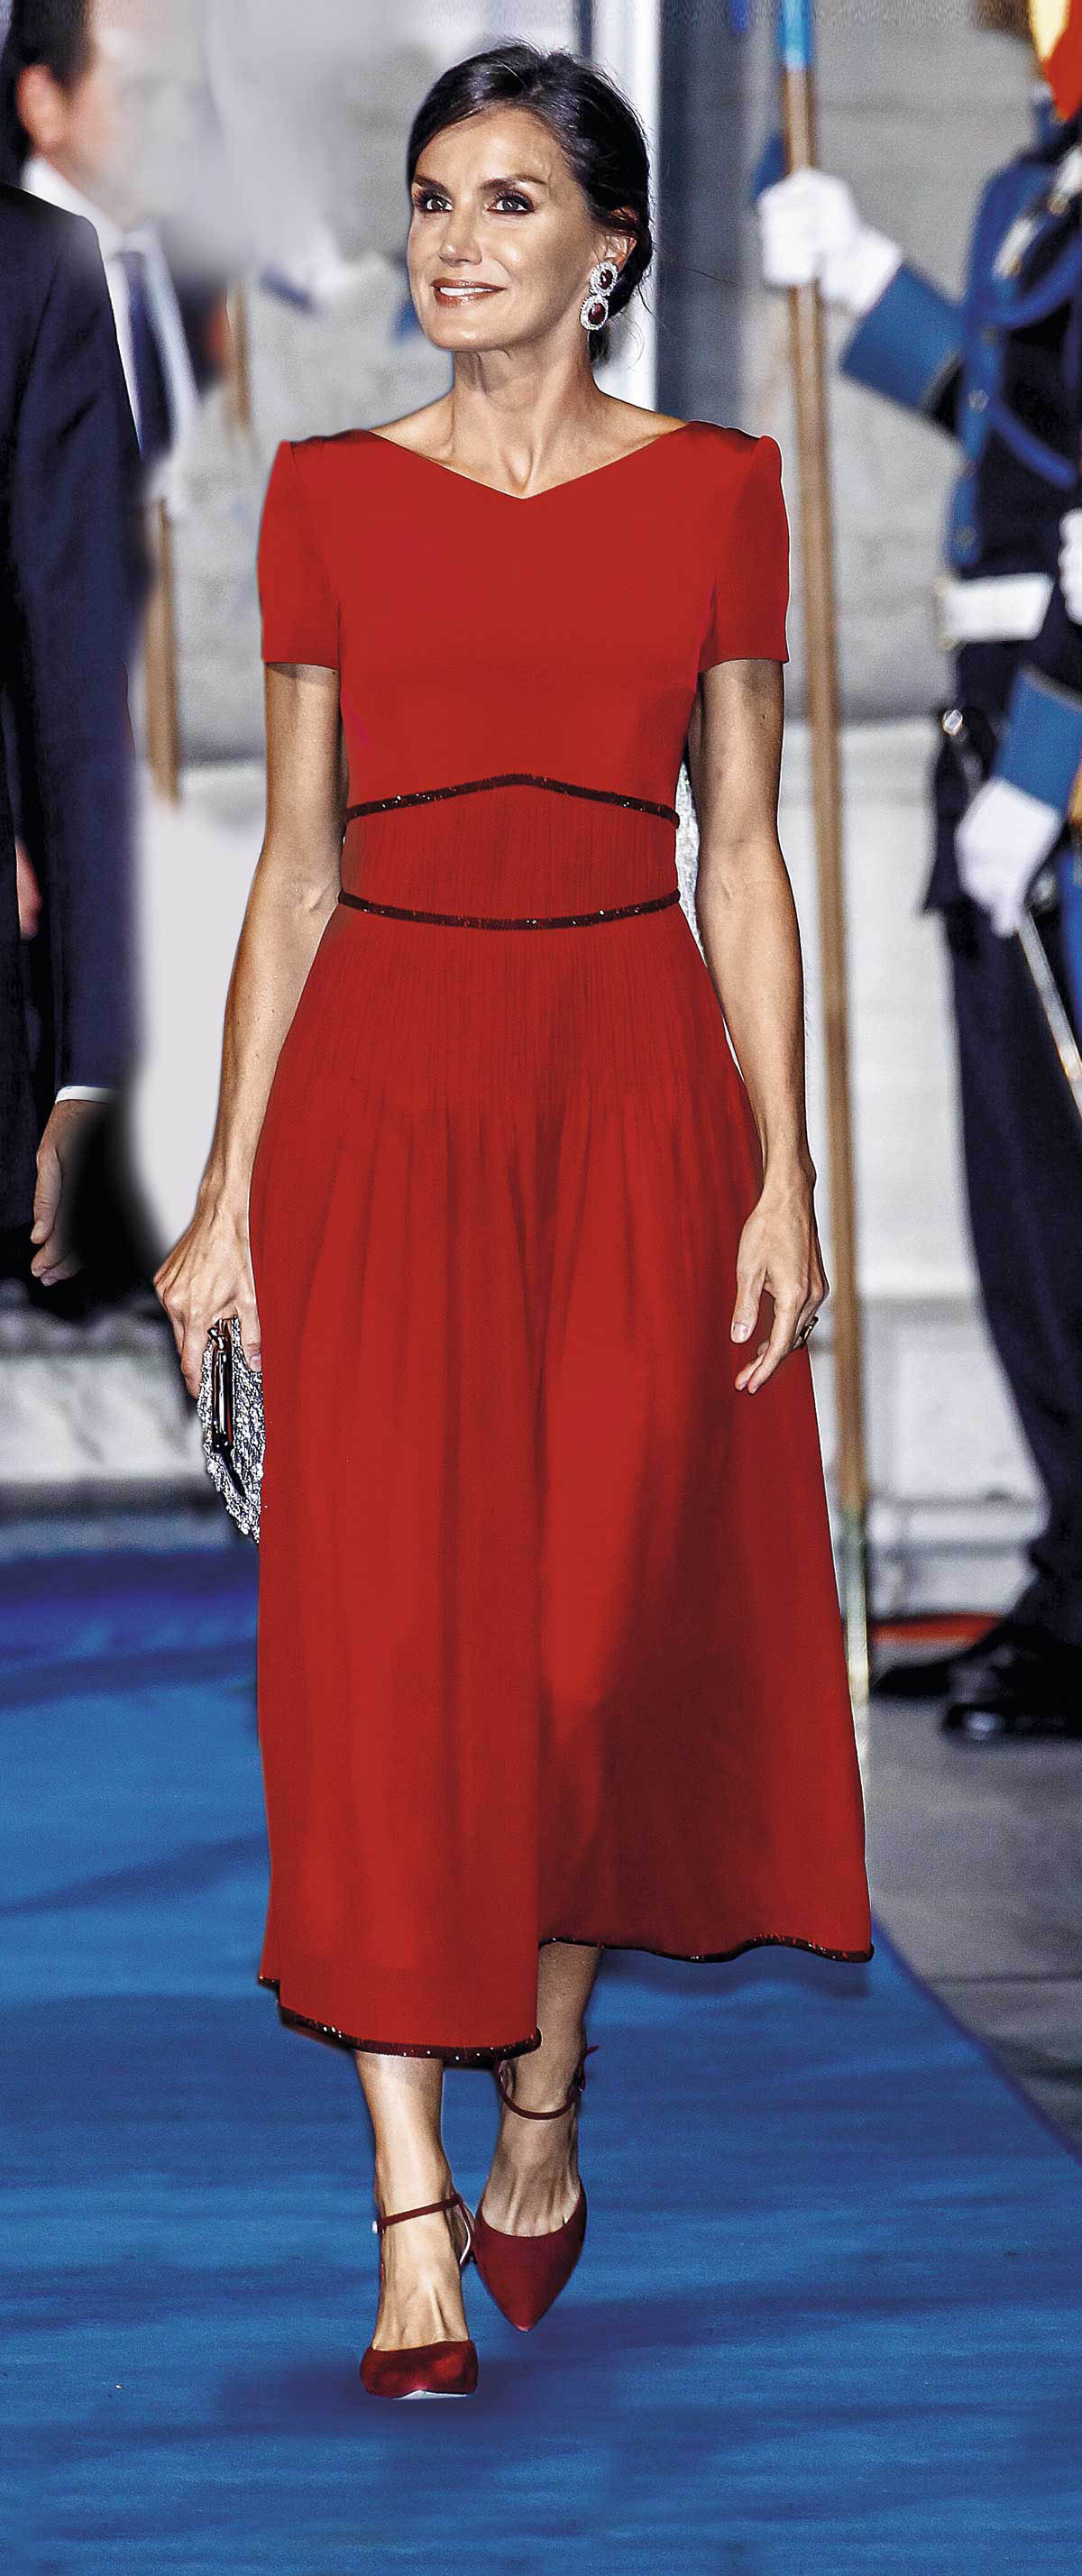 La Reina Letizia, en los Premios Princesa de Asturias de 2019, con vestido rojo de Felipe Varela